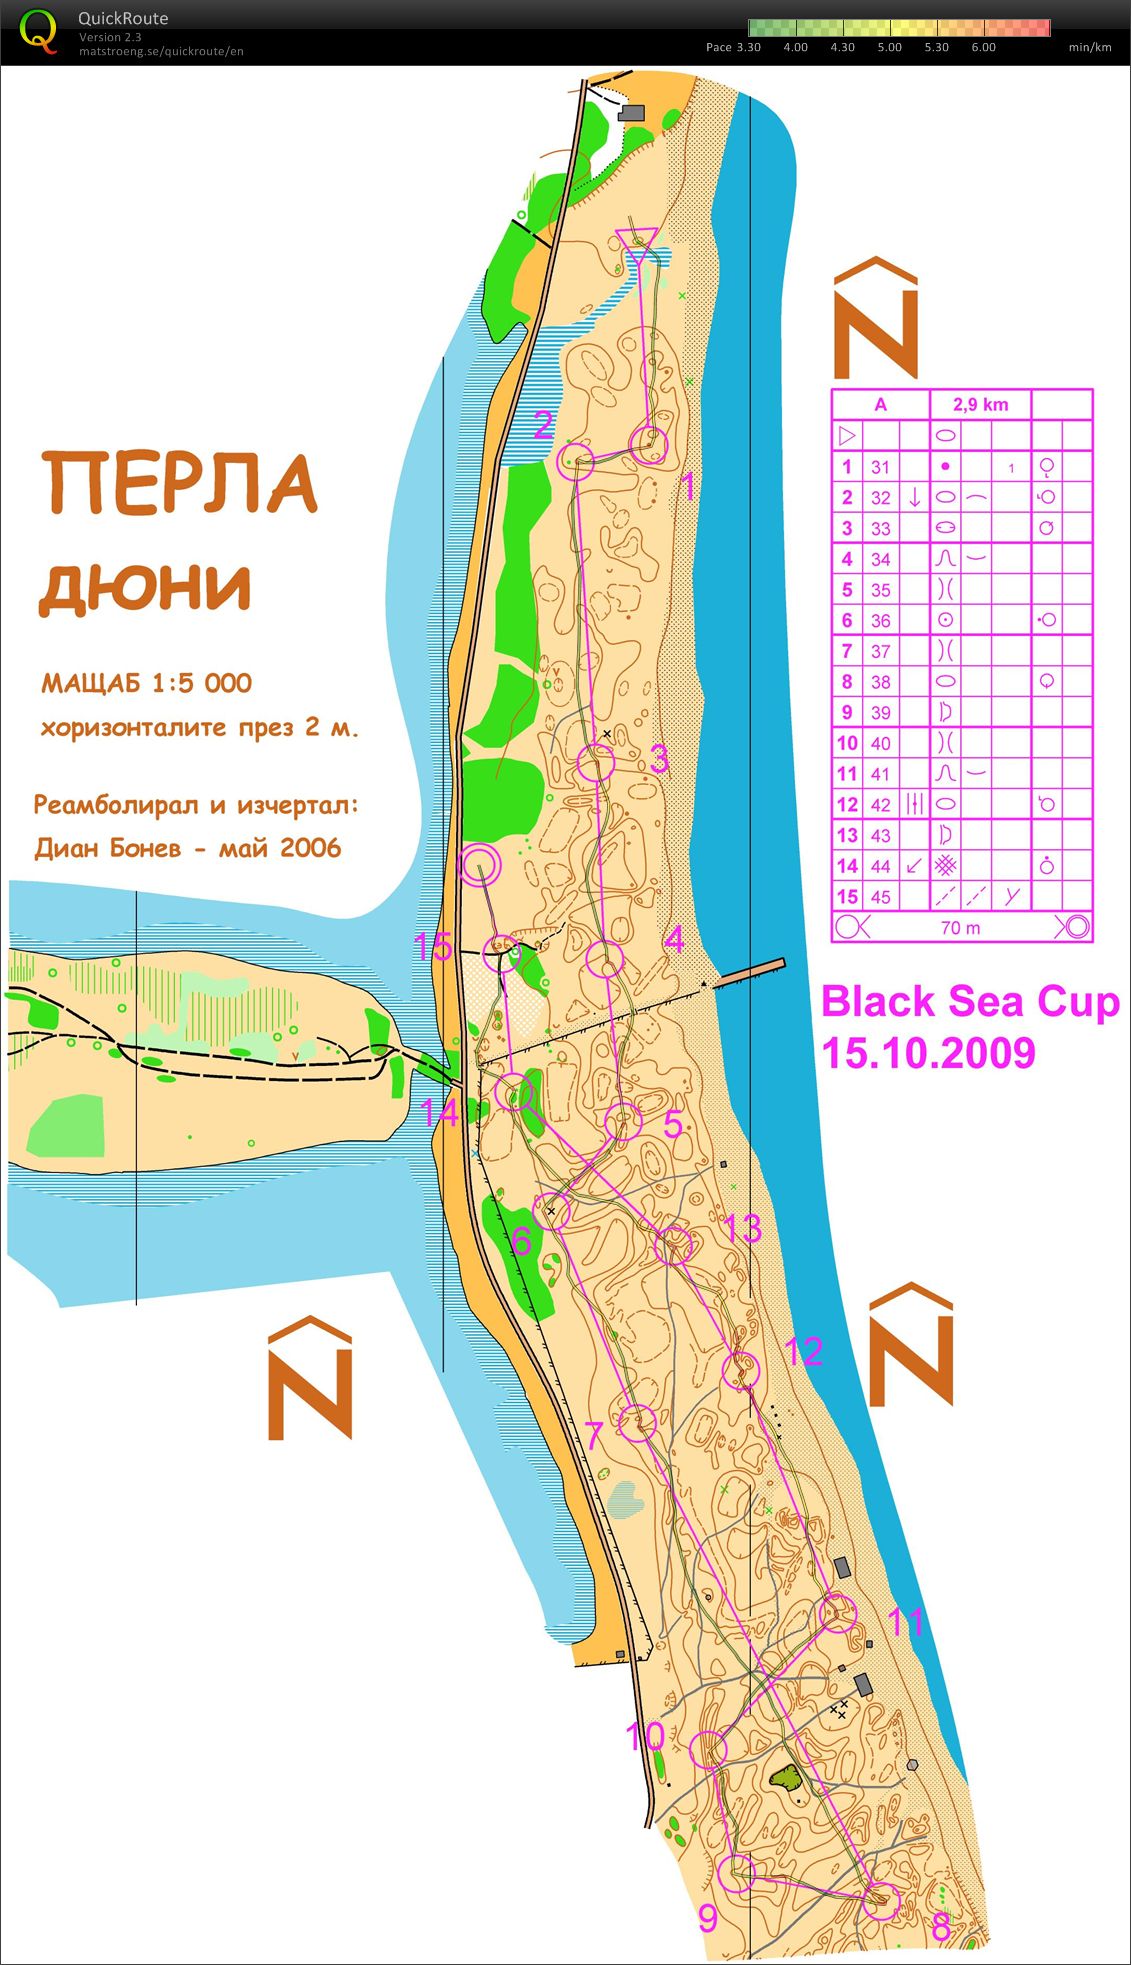 Black Sea Cup 2 Sprint (15.10.2009)